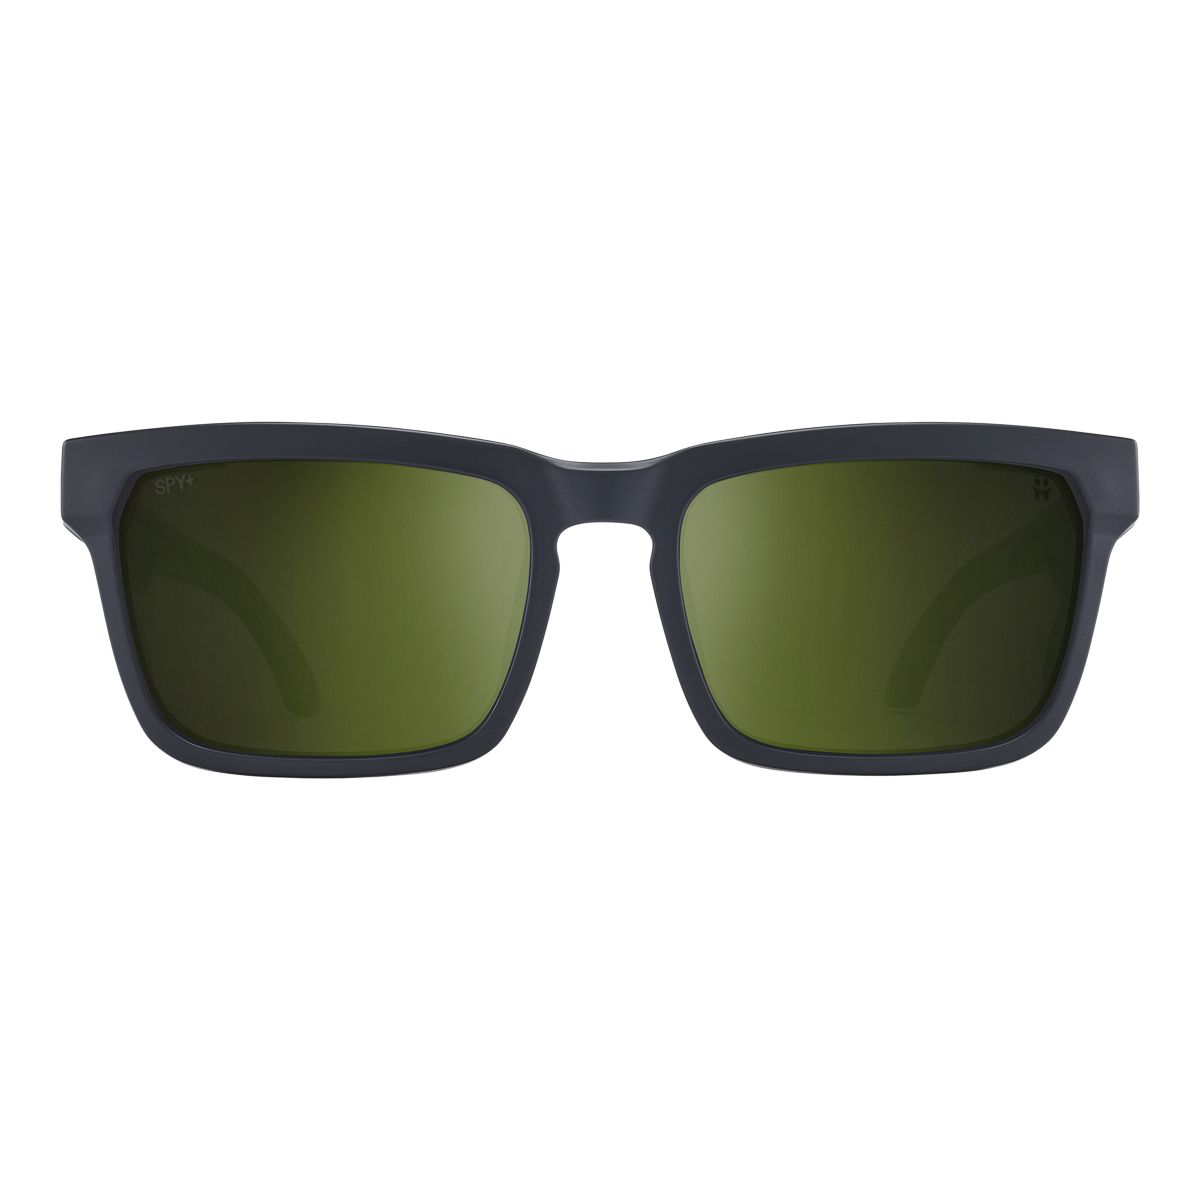 Image of Spy Helm Tech Sunglasses